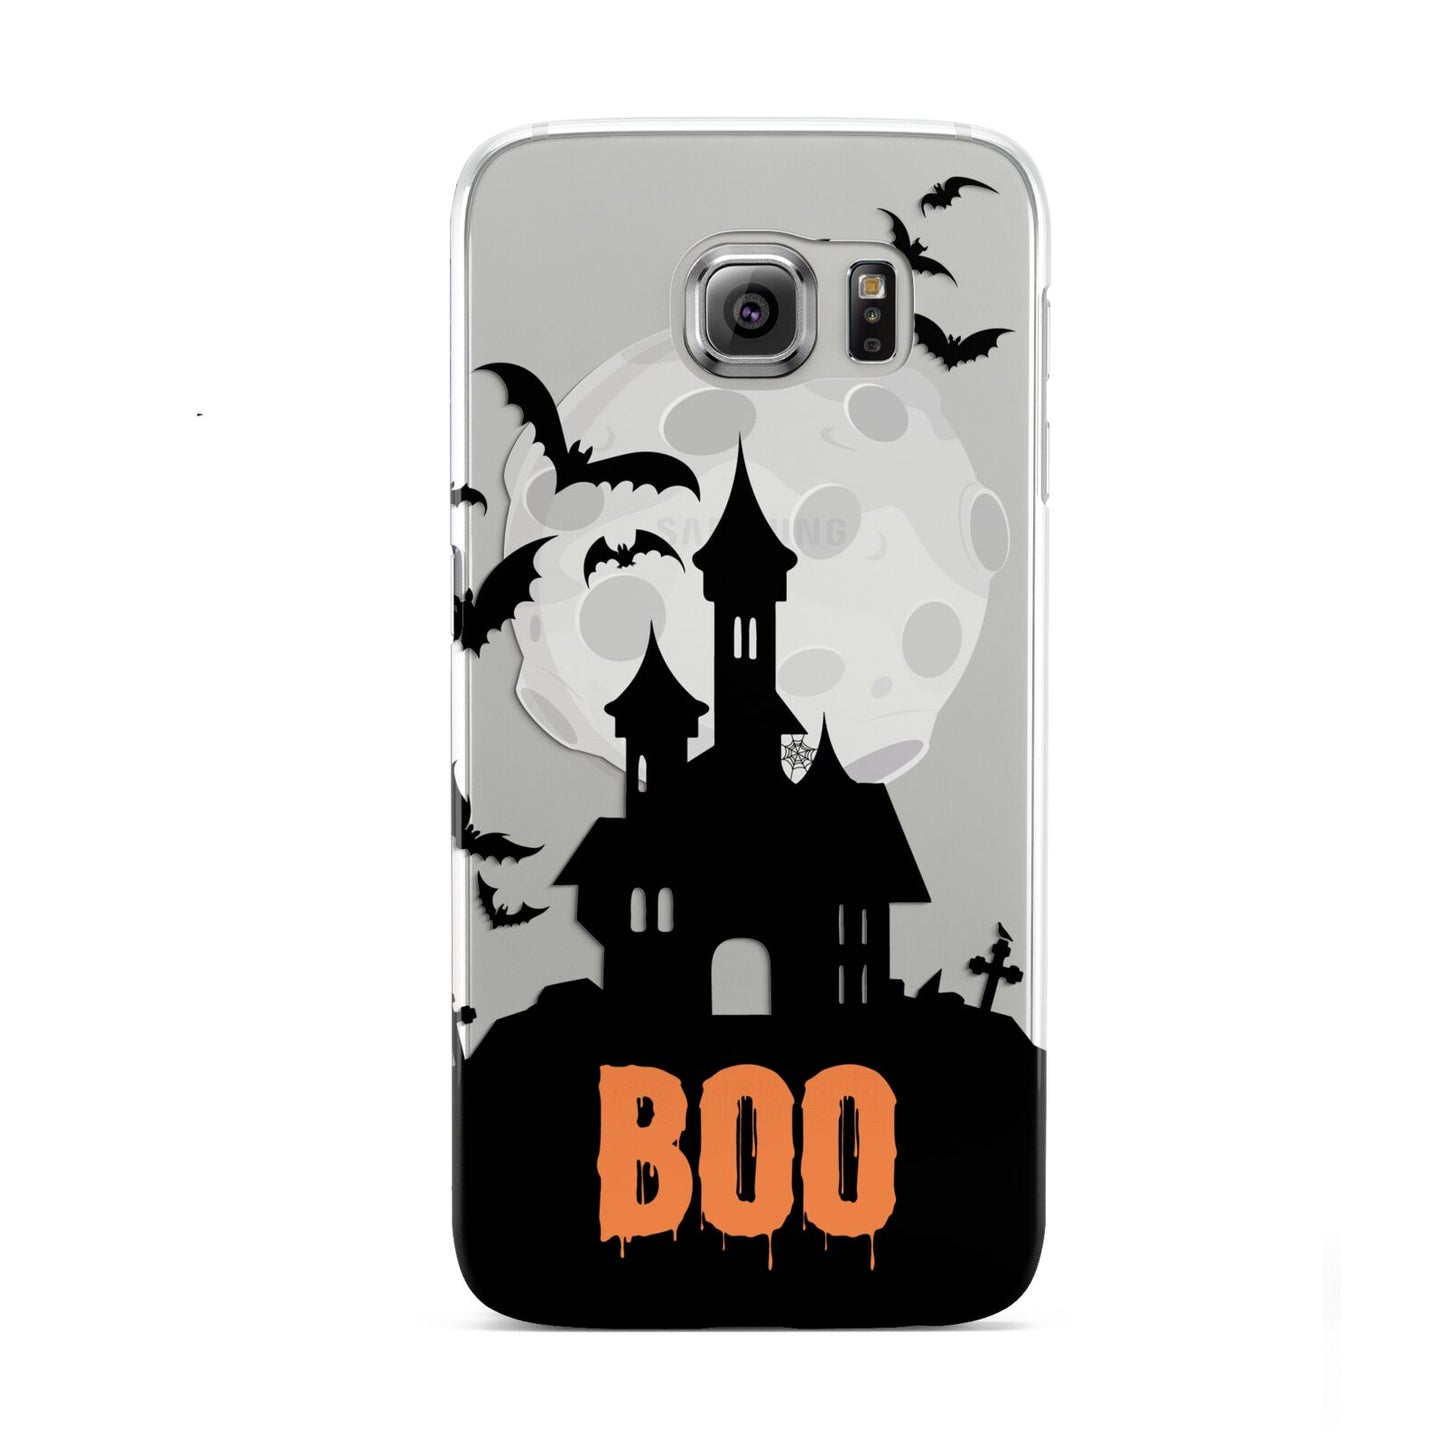 Boo Gothic Black Halloween Samsung Galaxy S6 Case